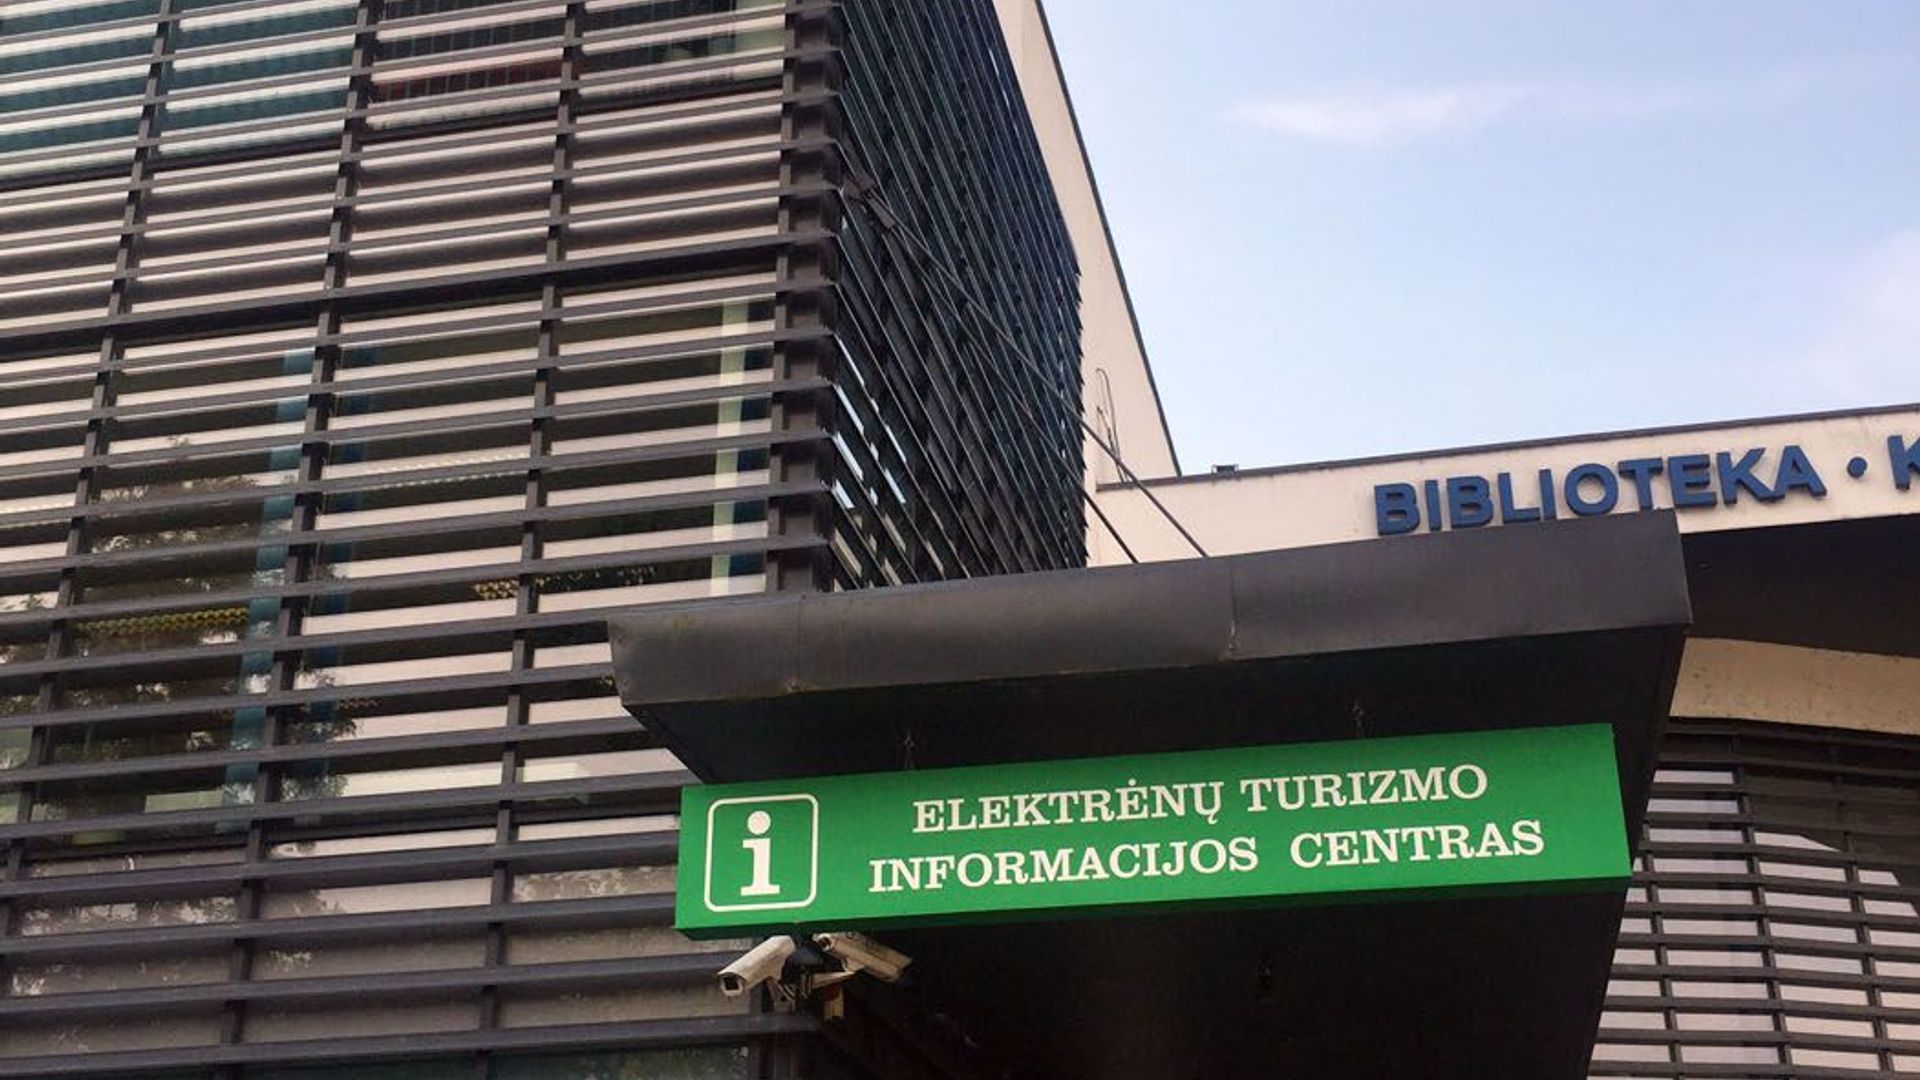 Elektrėnai Tourism Information Center